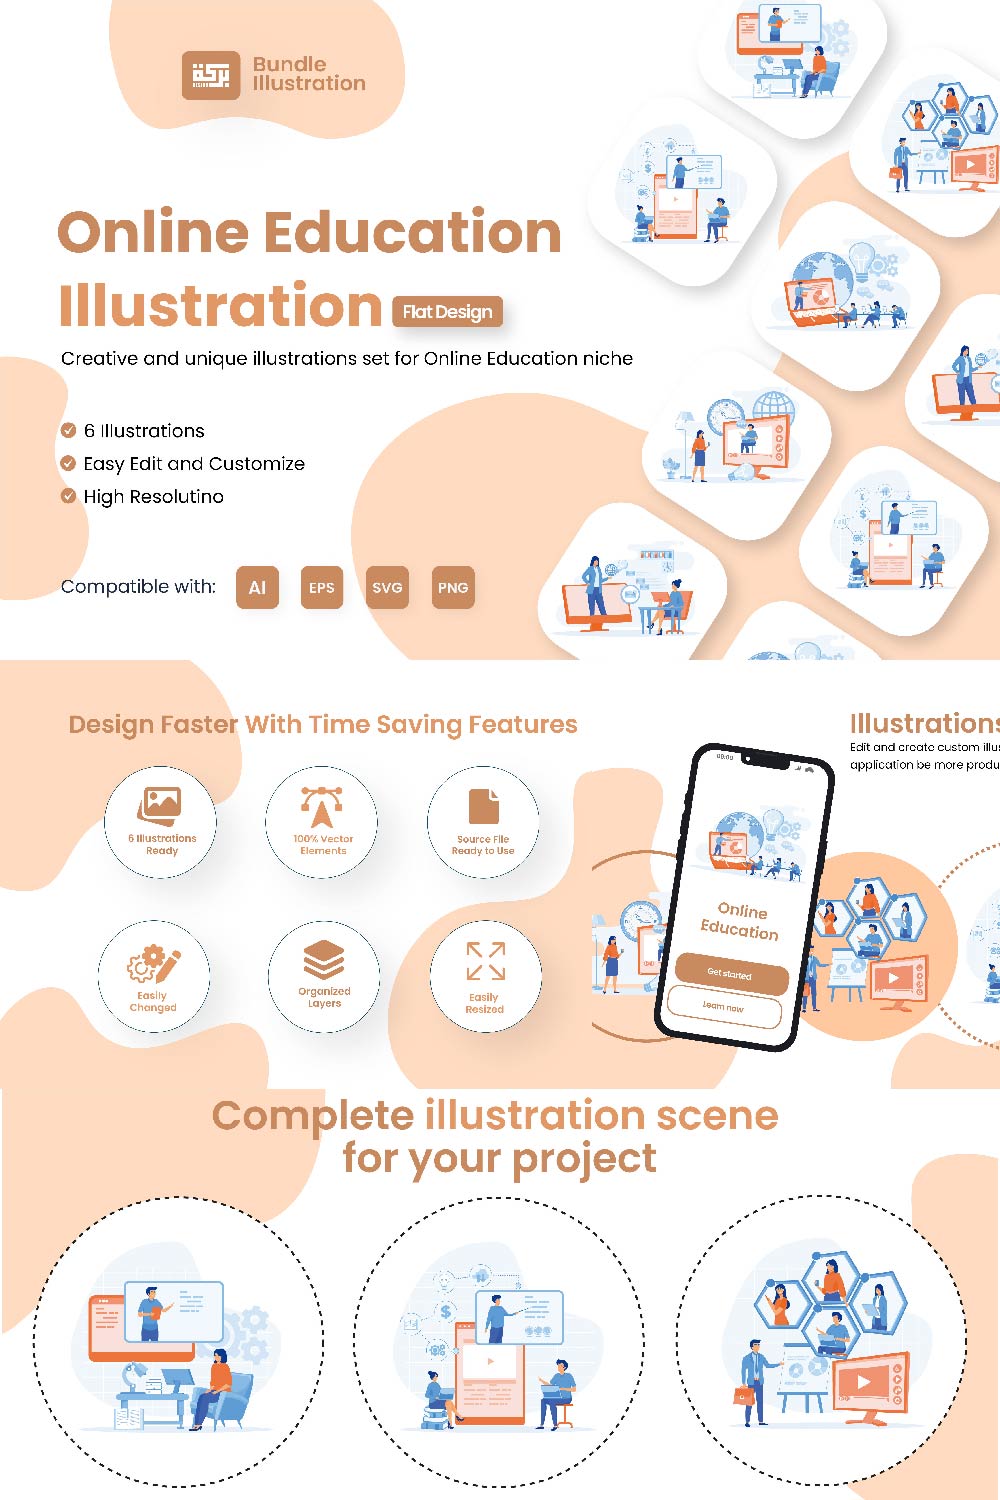 Online Education Illustration Design pinterest preview image.